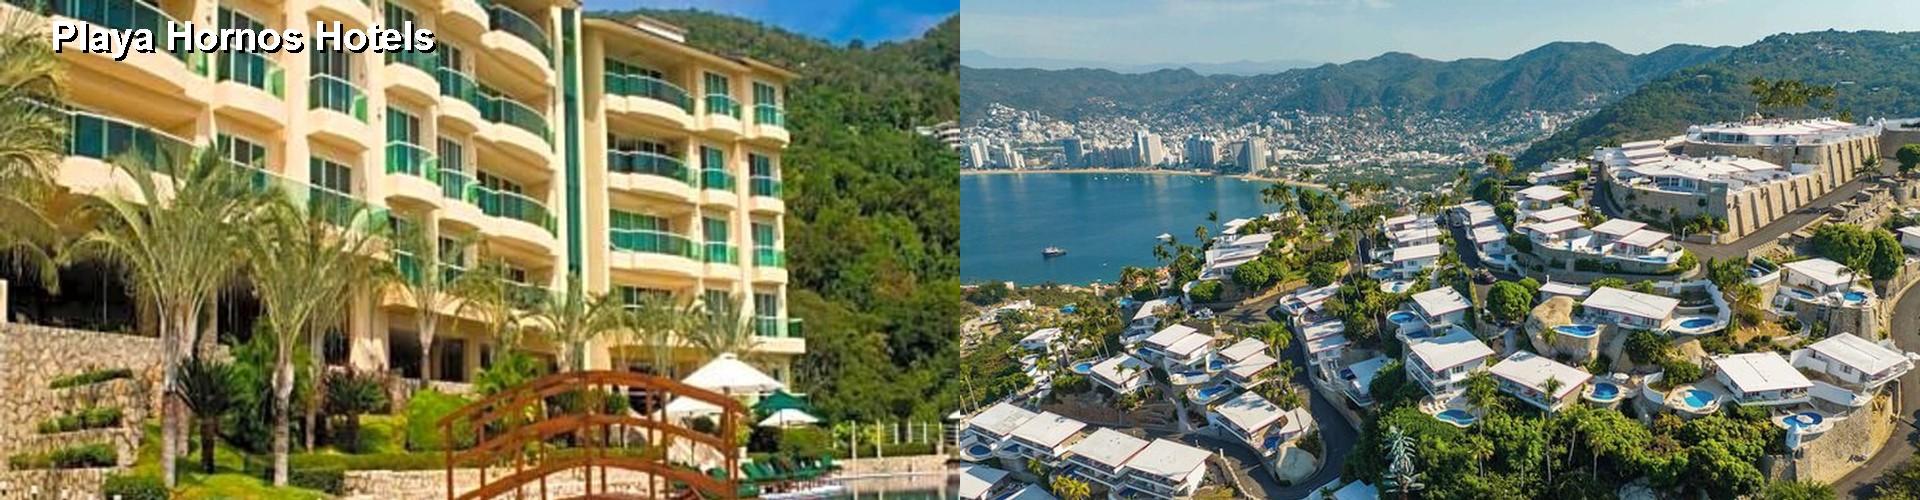 5 Best Hotels near Playa Hornos